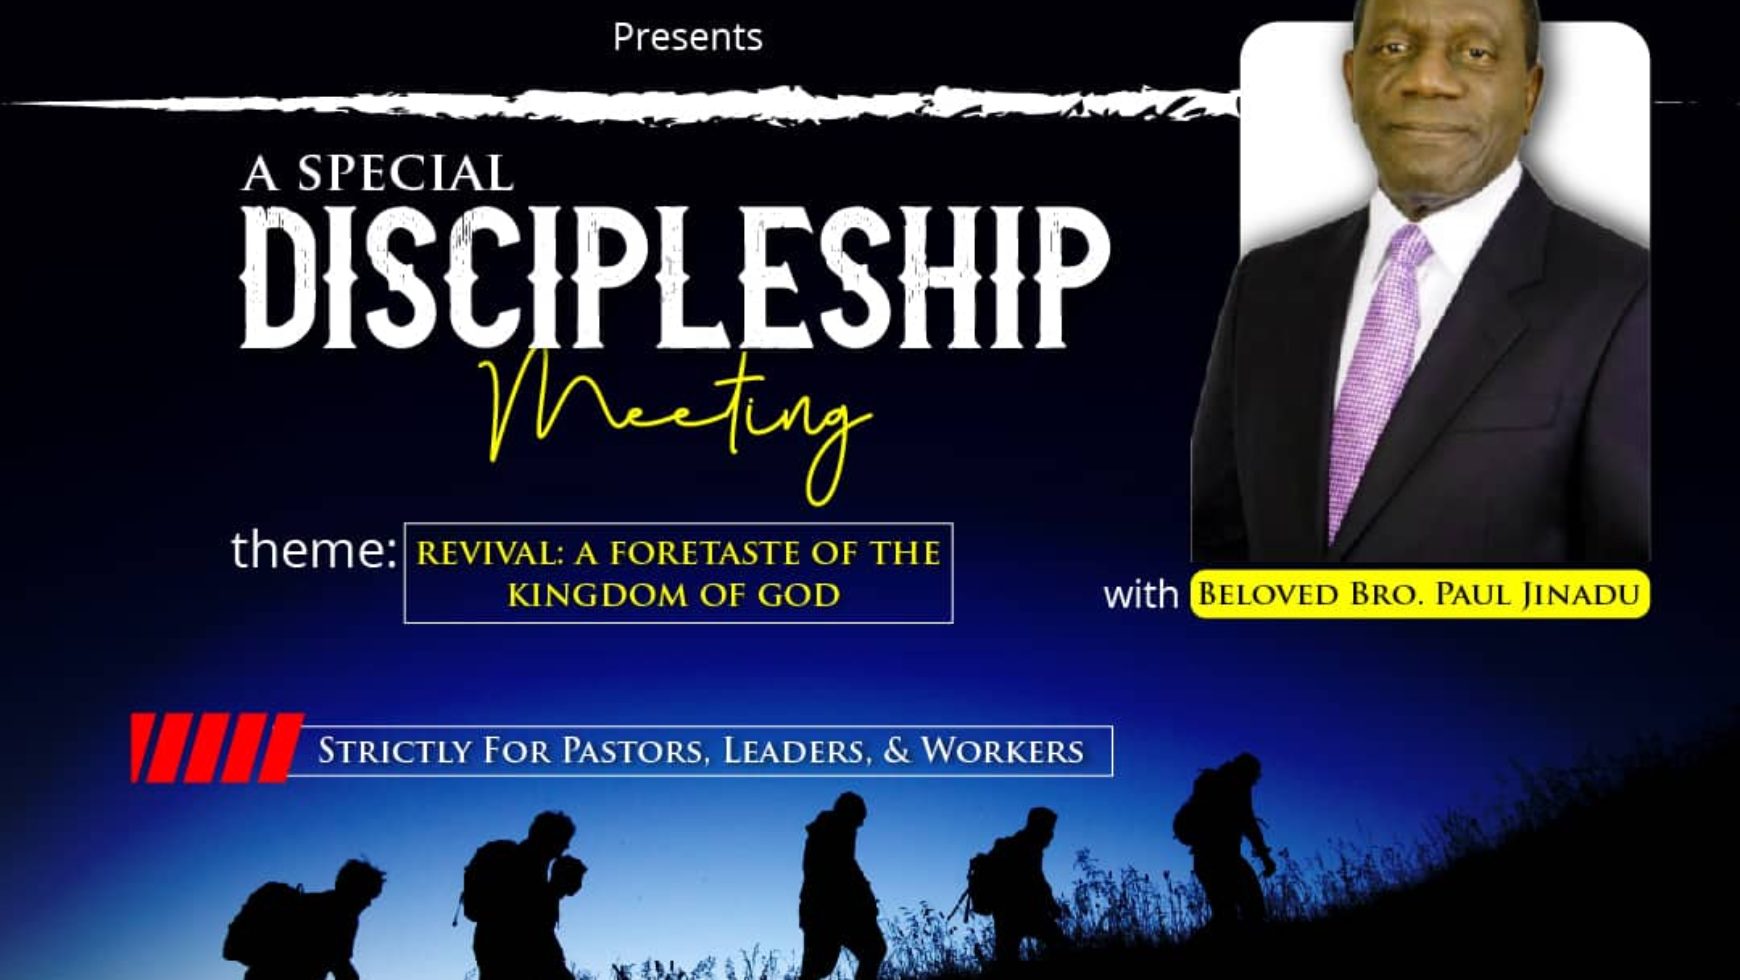 Leadership Enrichment Seminar 2022: Revival: A Foretaste of the Kingdom of God by Rev Paul Jinadu (Lagos edition)